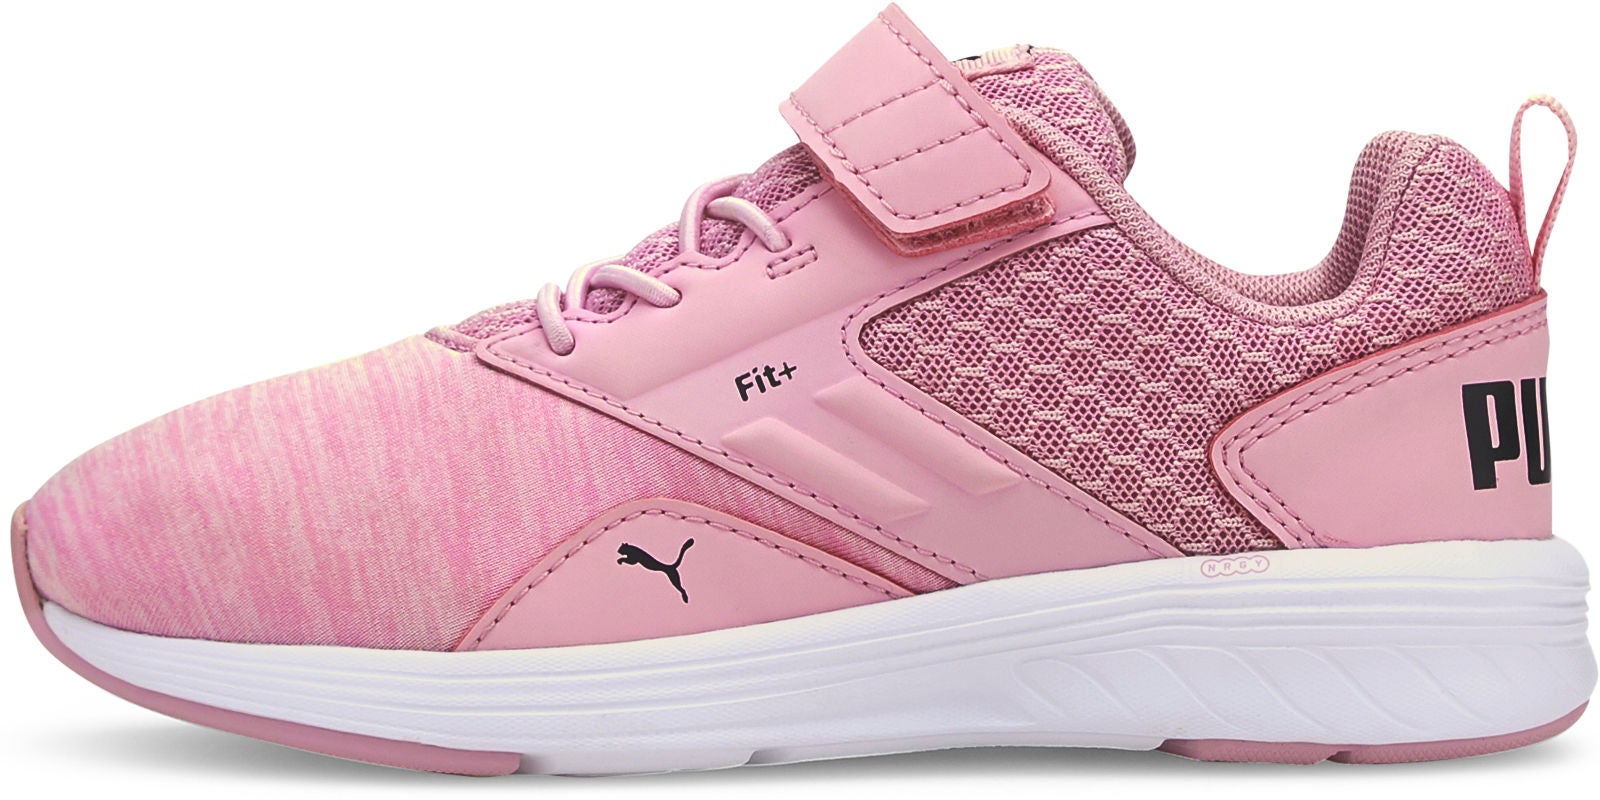 Puma Comet V PS Sneaker, Pale Pink, 28